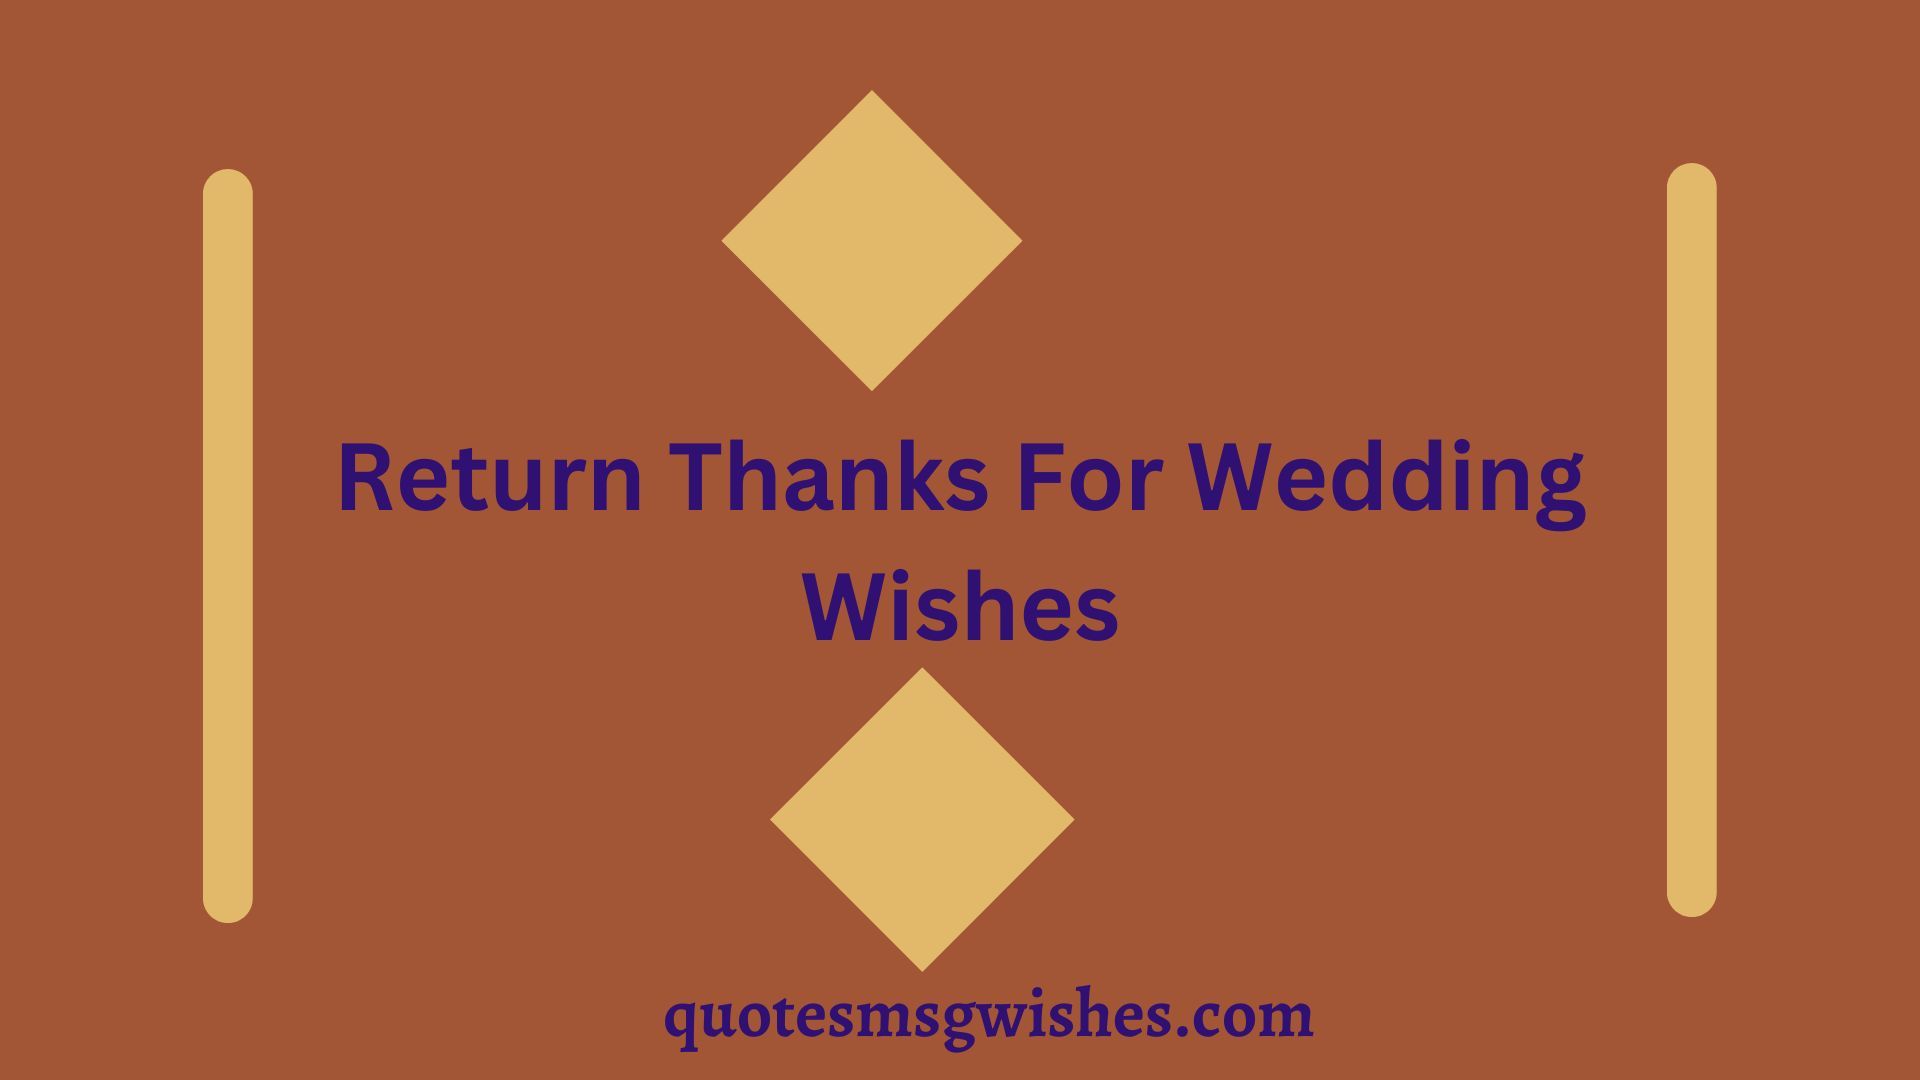 Return Thanks For Wedding Wishes